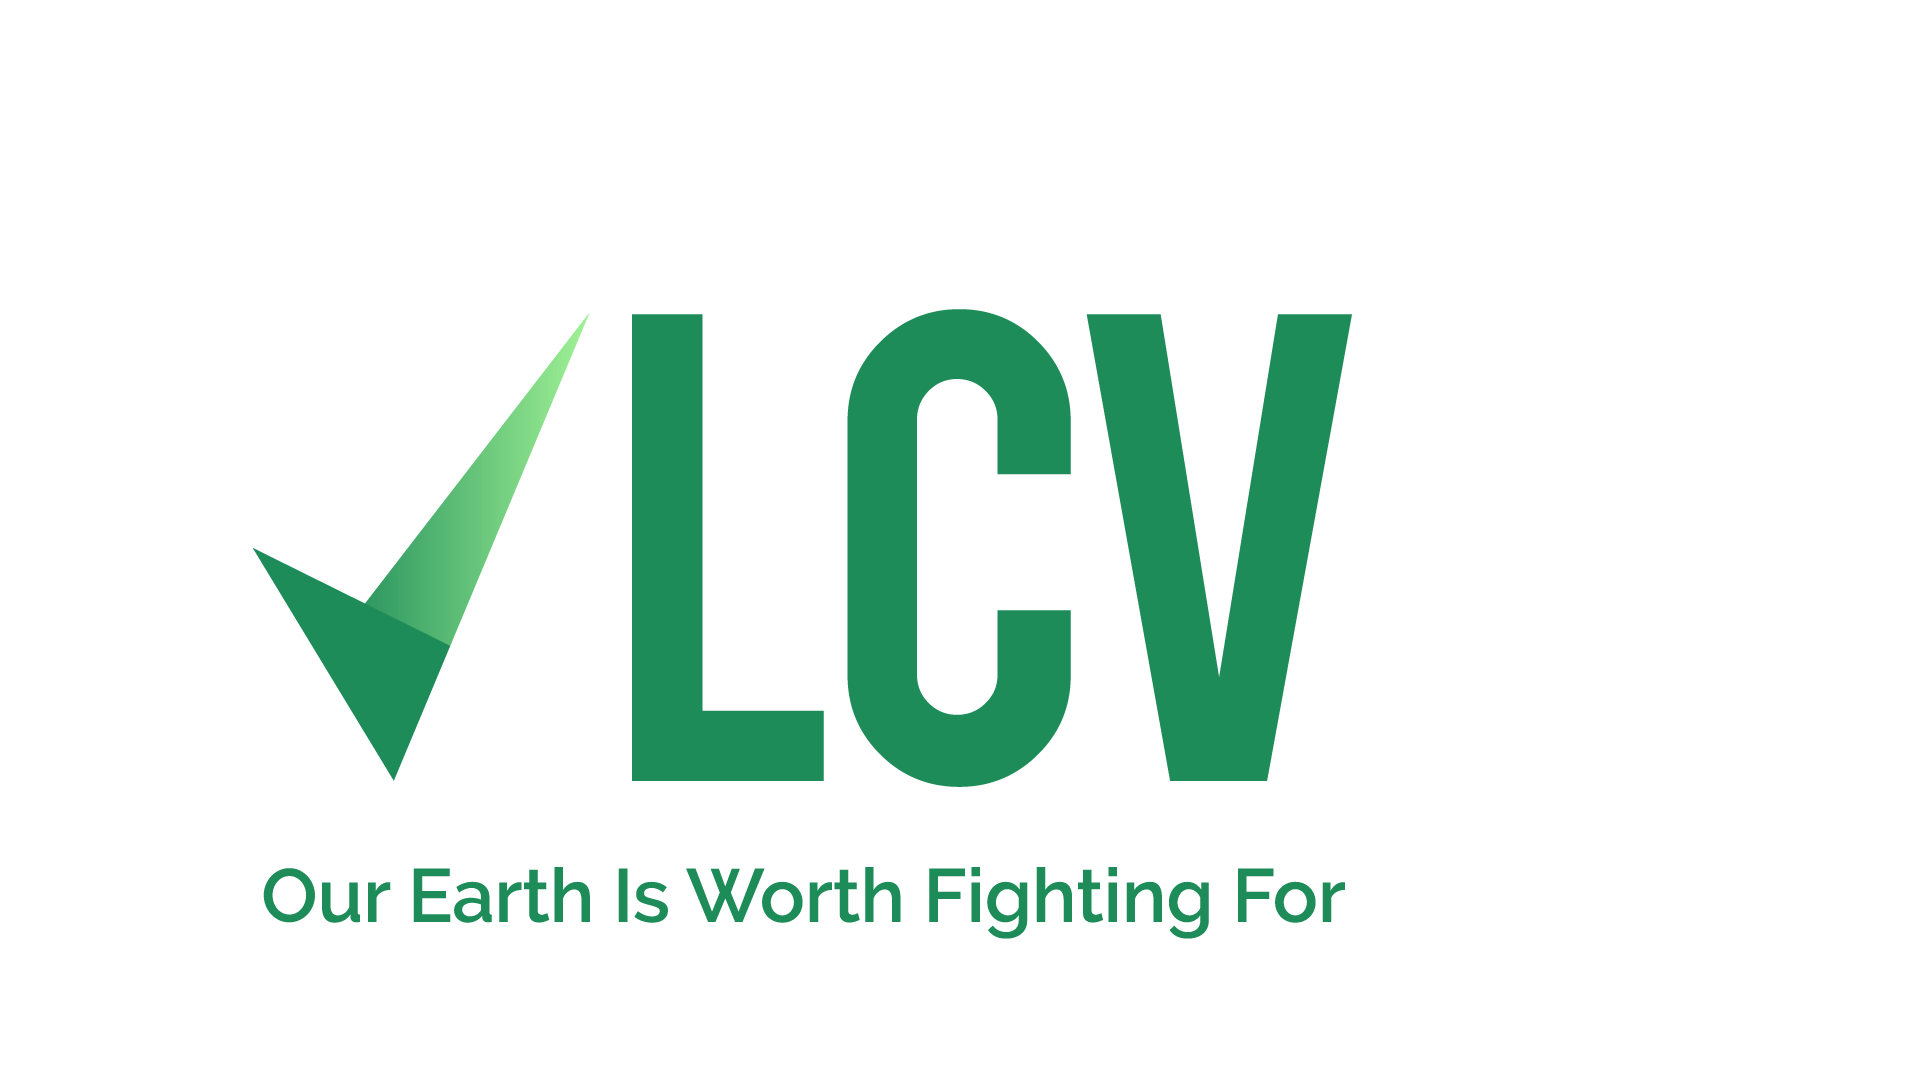 League of Conservation Voters